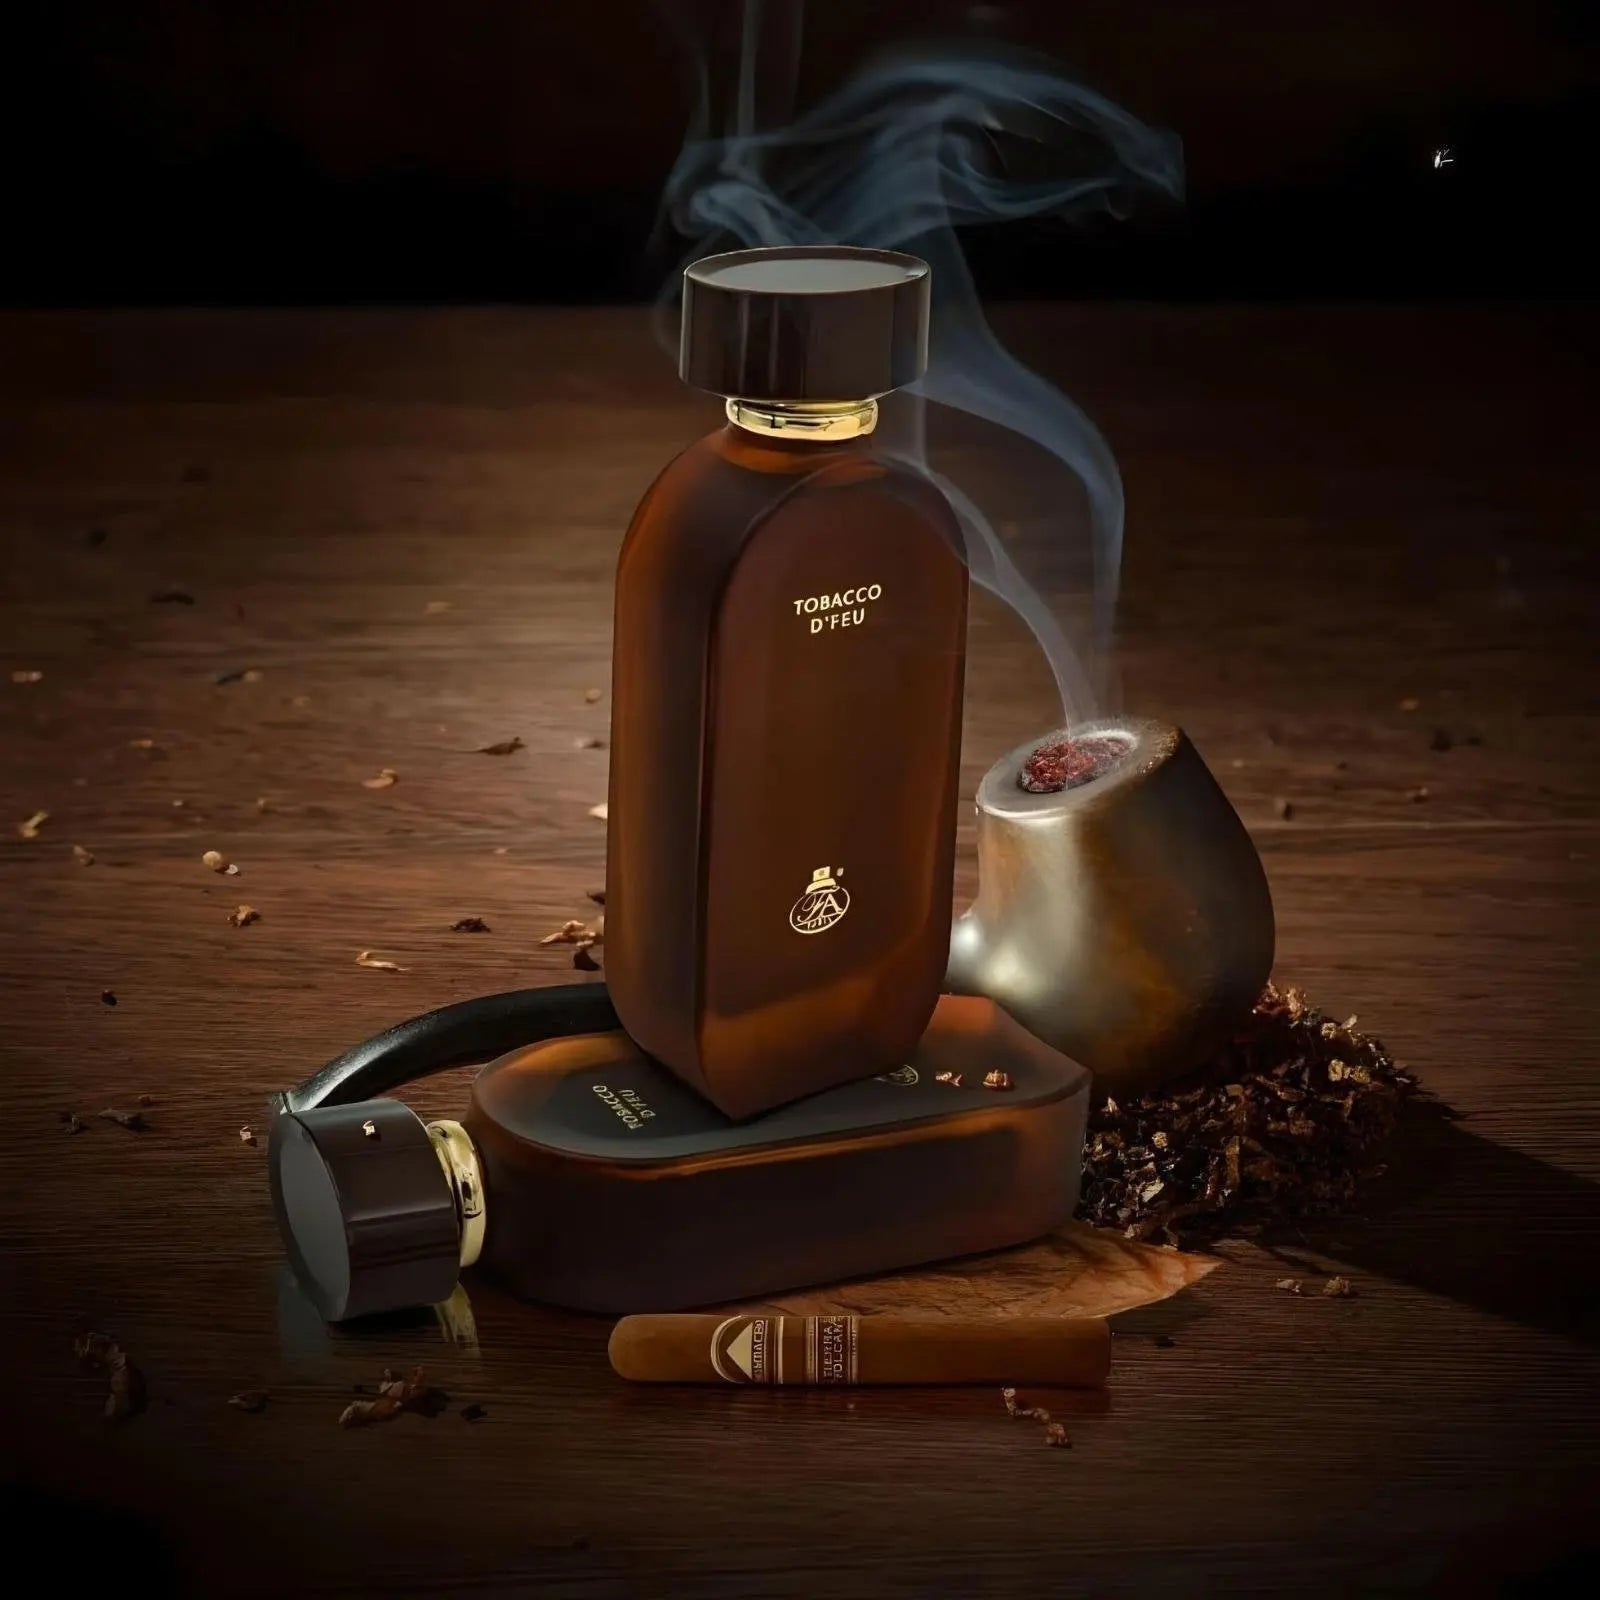 Tobacco D’feu Perfume 100ml EDP FA Paris by Fragrance World